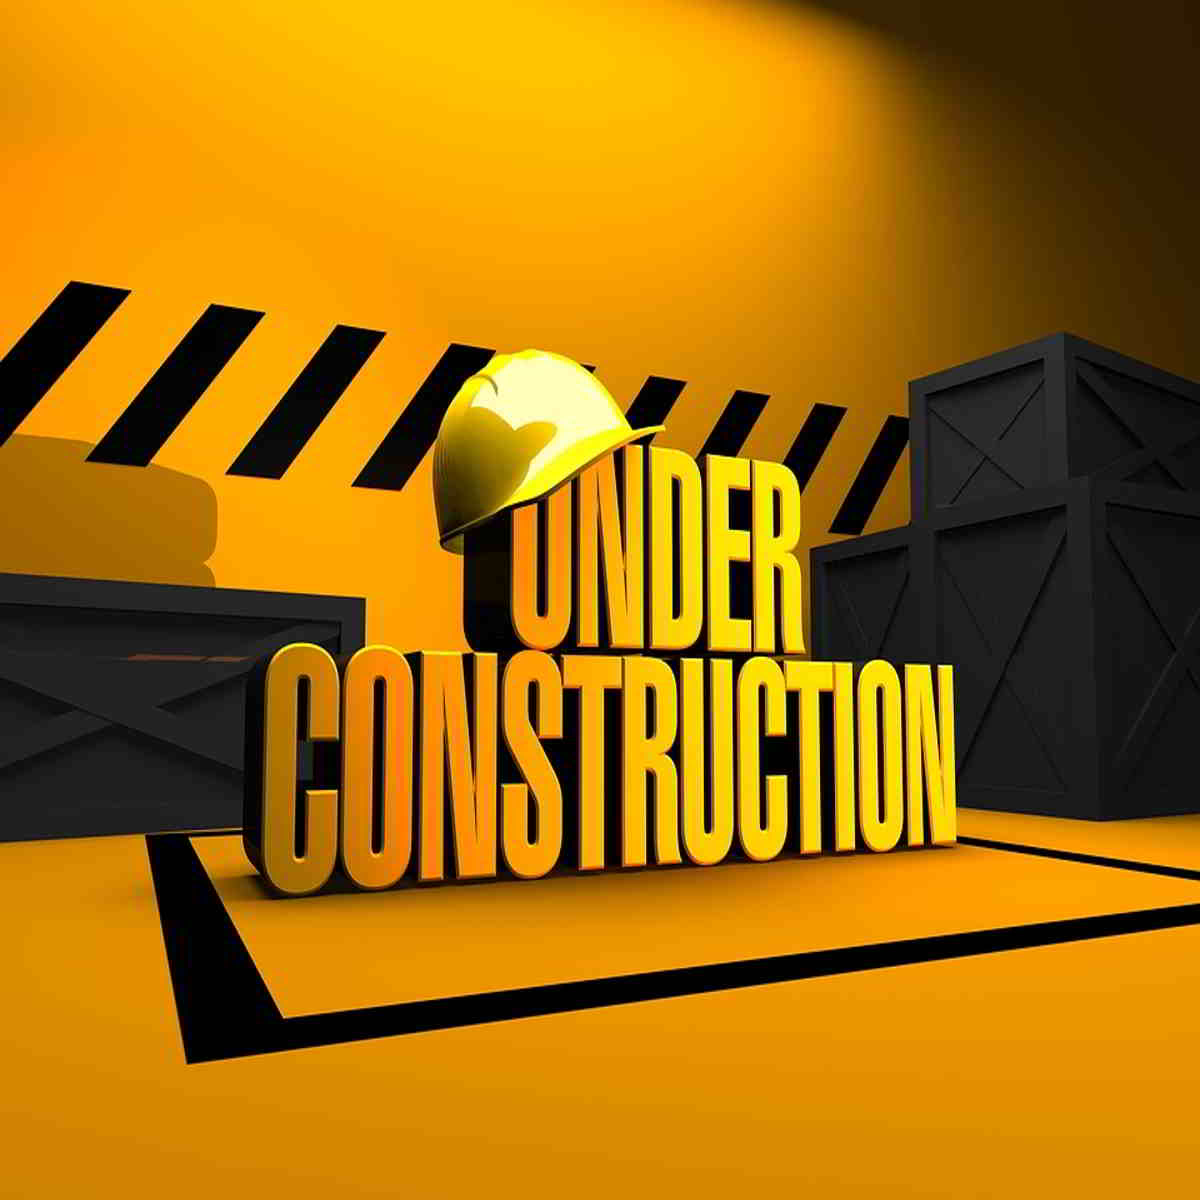 Is construction management marketable in Kenya